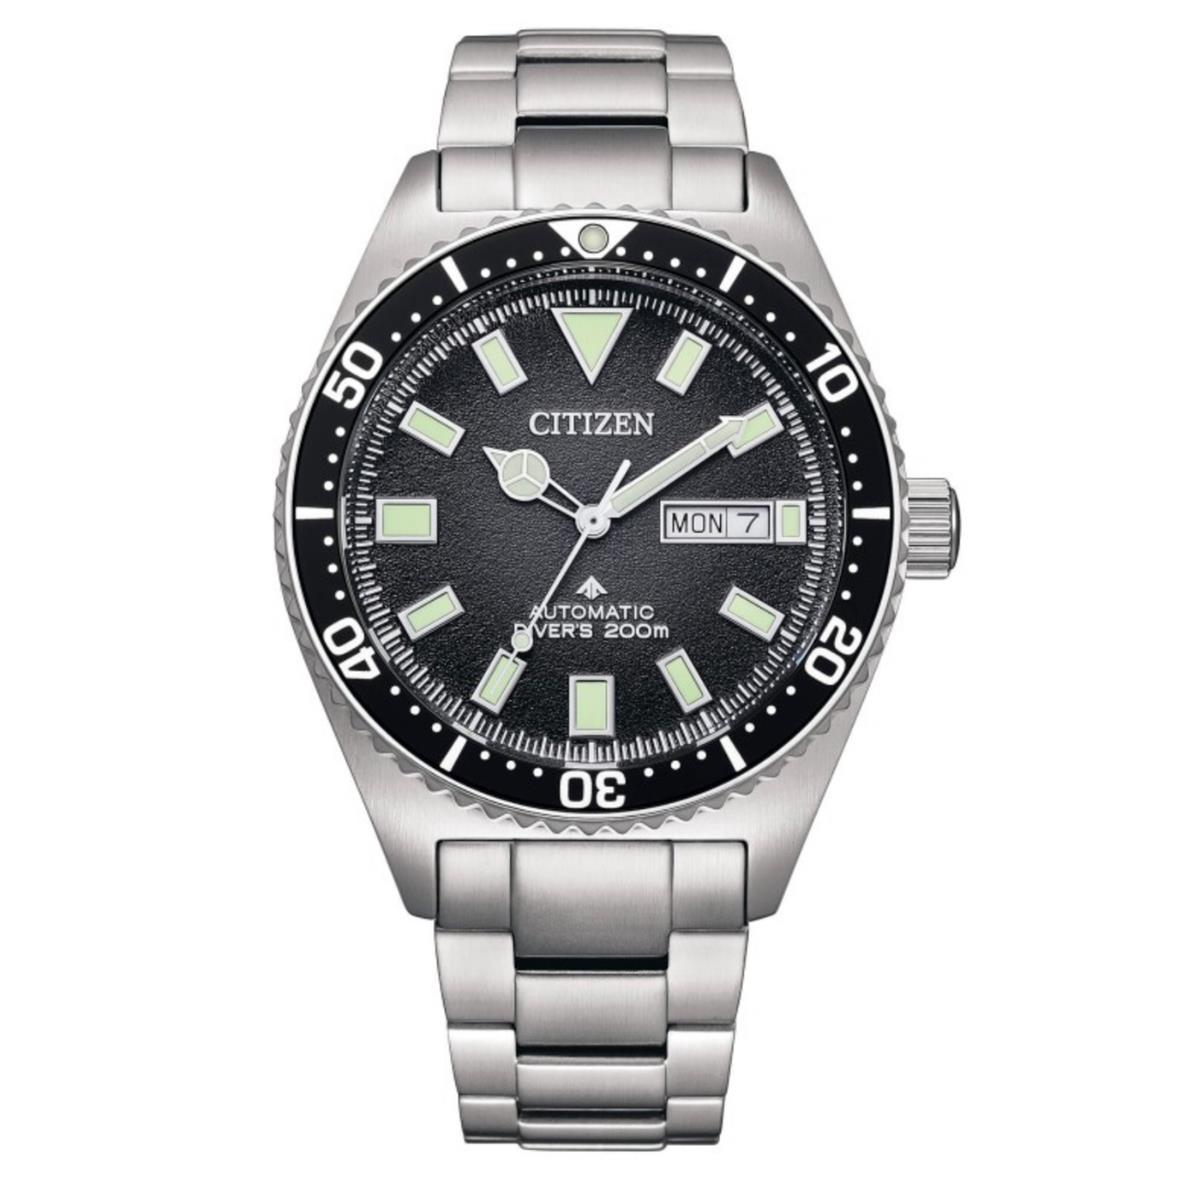 Citizen Men`s Promaster Diver Automatic Black Dial Watch - NY0120-52E - Dial: Black, Band: Silver, Bezel: Black